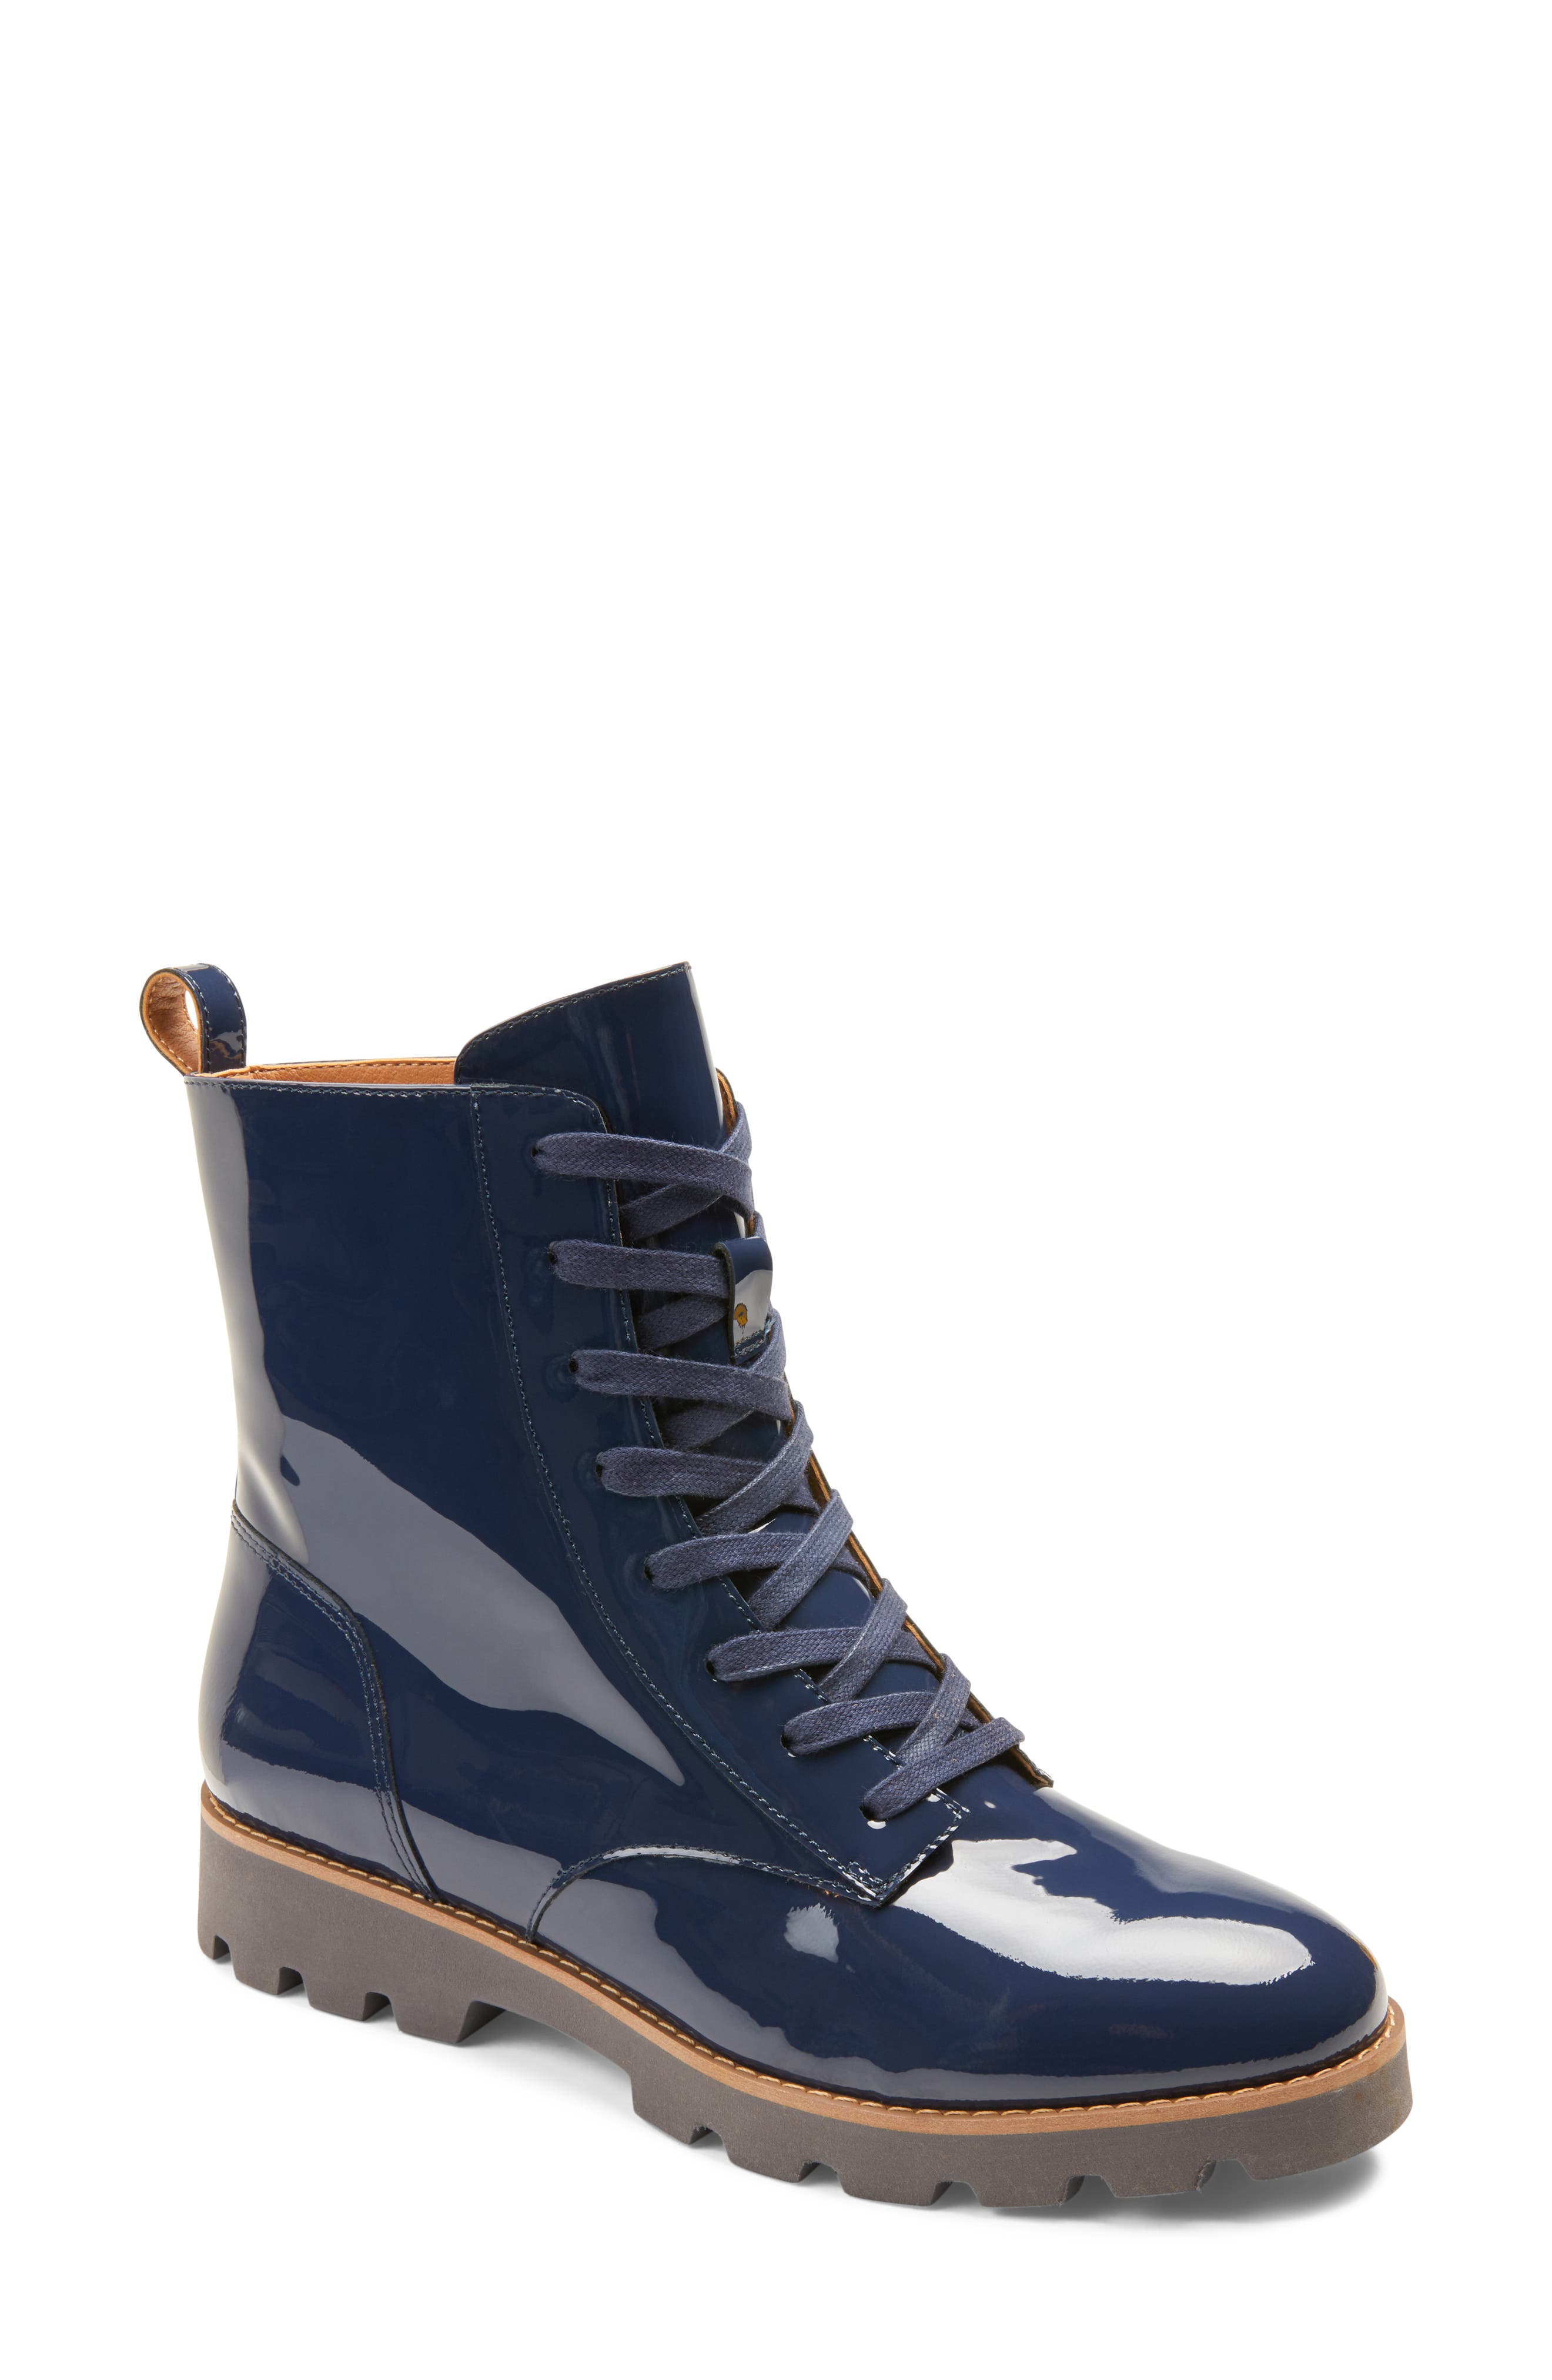 vionic navy shoes